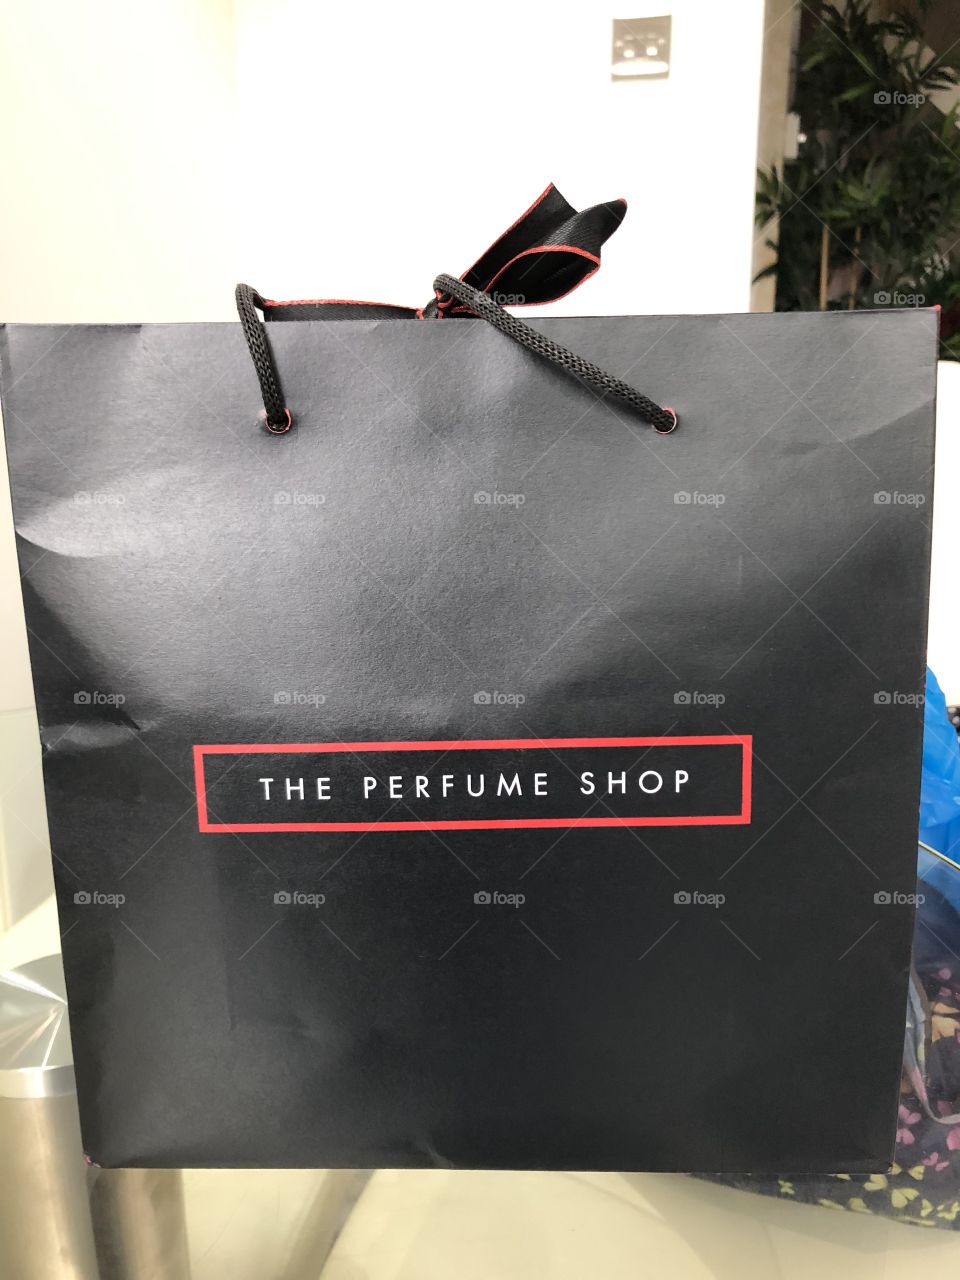 Let shop the perfume 